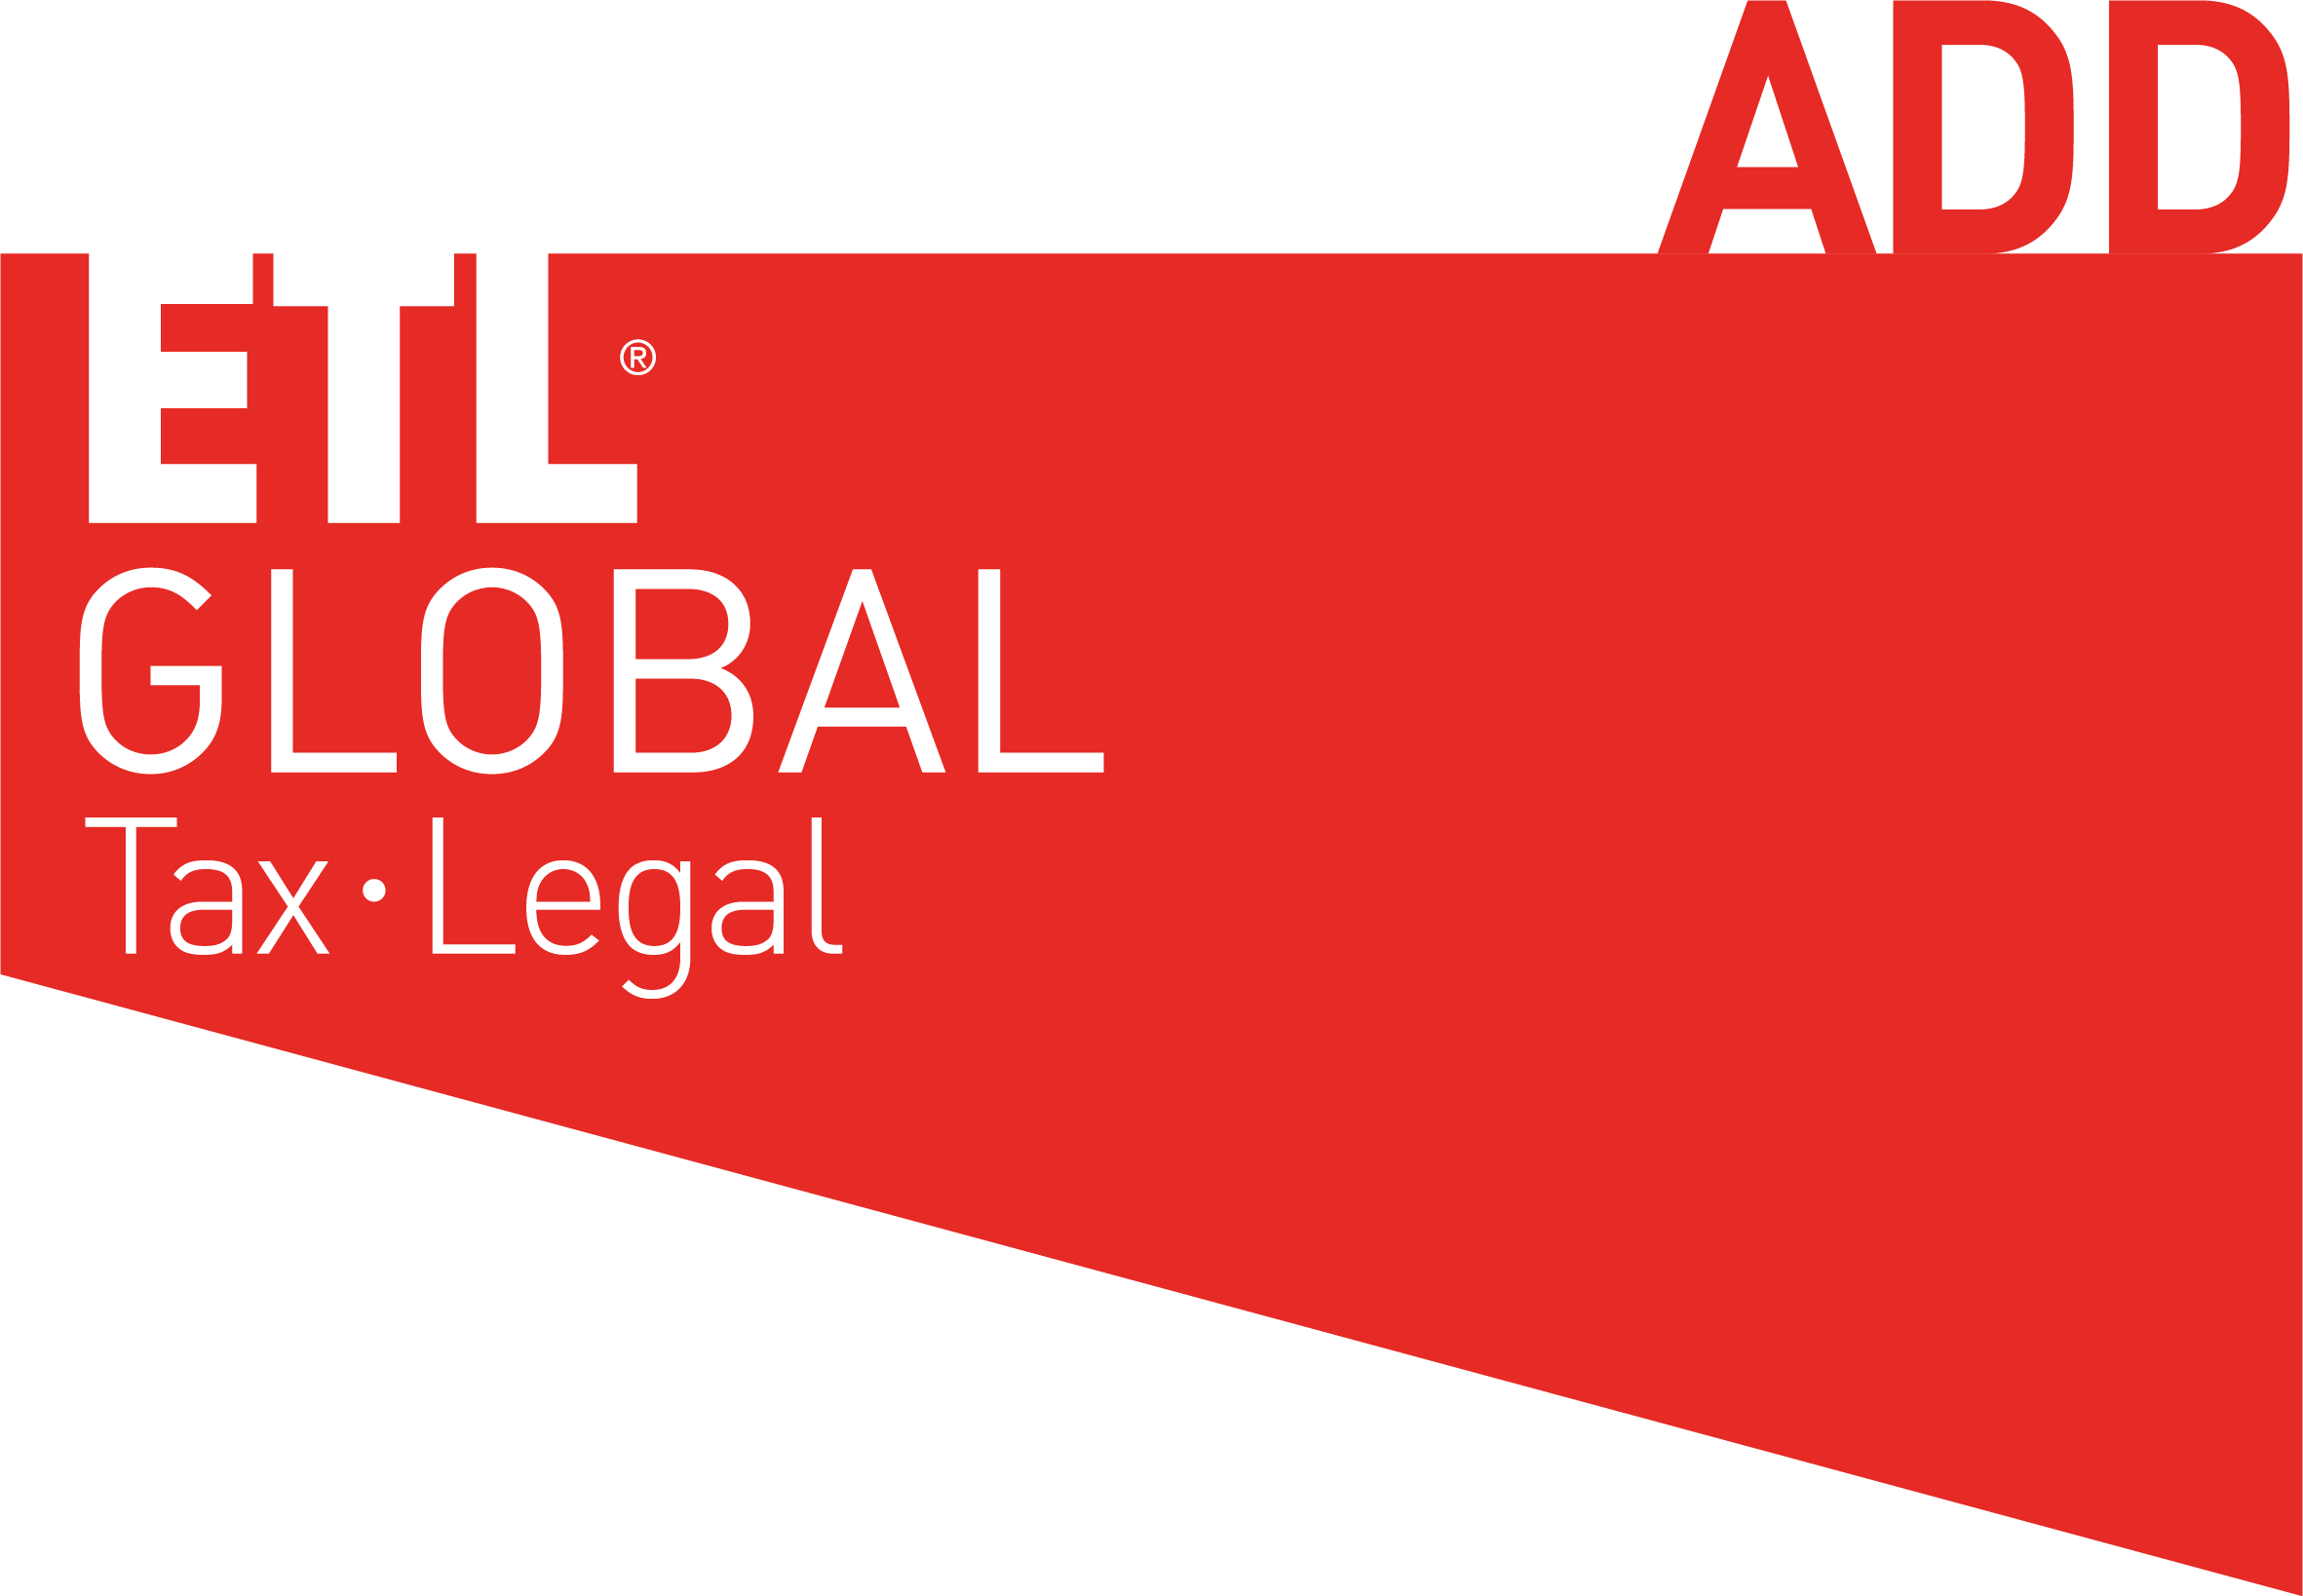 Pierre Advocats integrats en ADD ETL GLOBAL TAX LEGAL